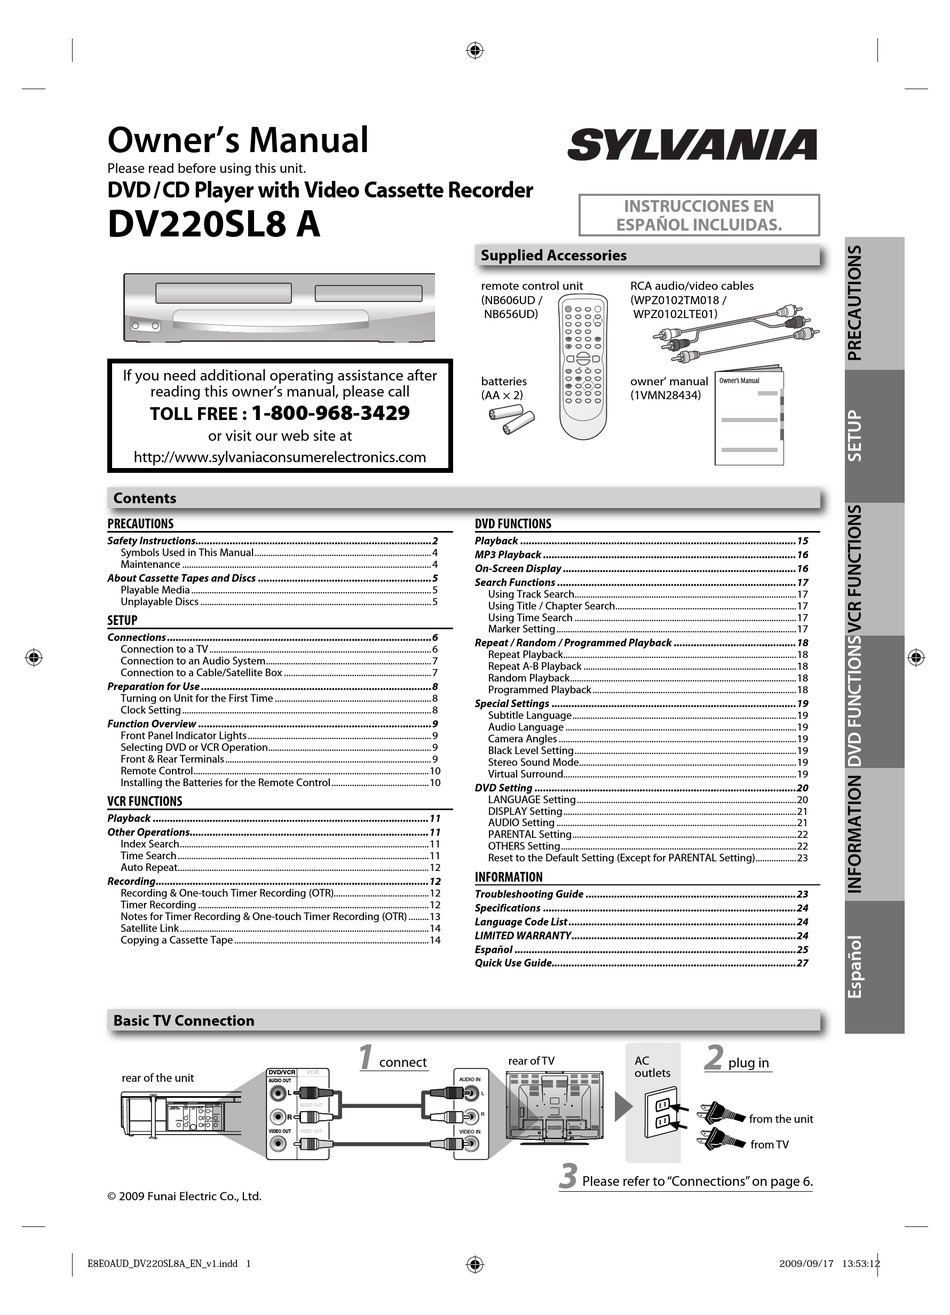 SYLVANIA DV220SL8 A OWNER'S MANUAL Pdf Download | ManualsLib